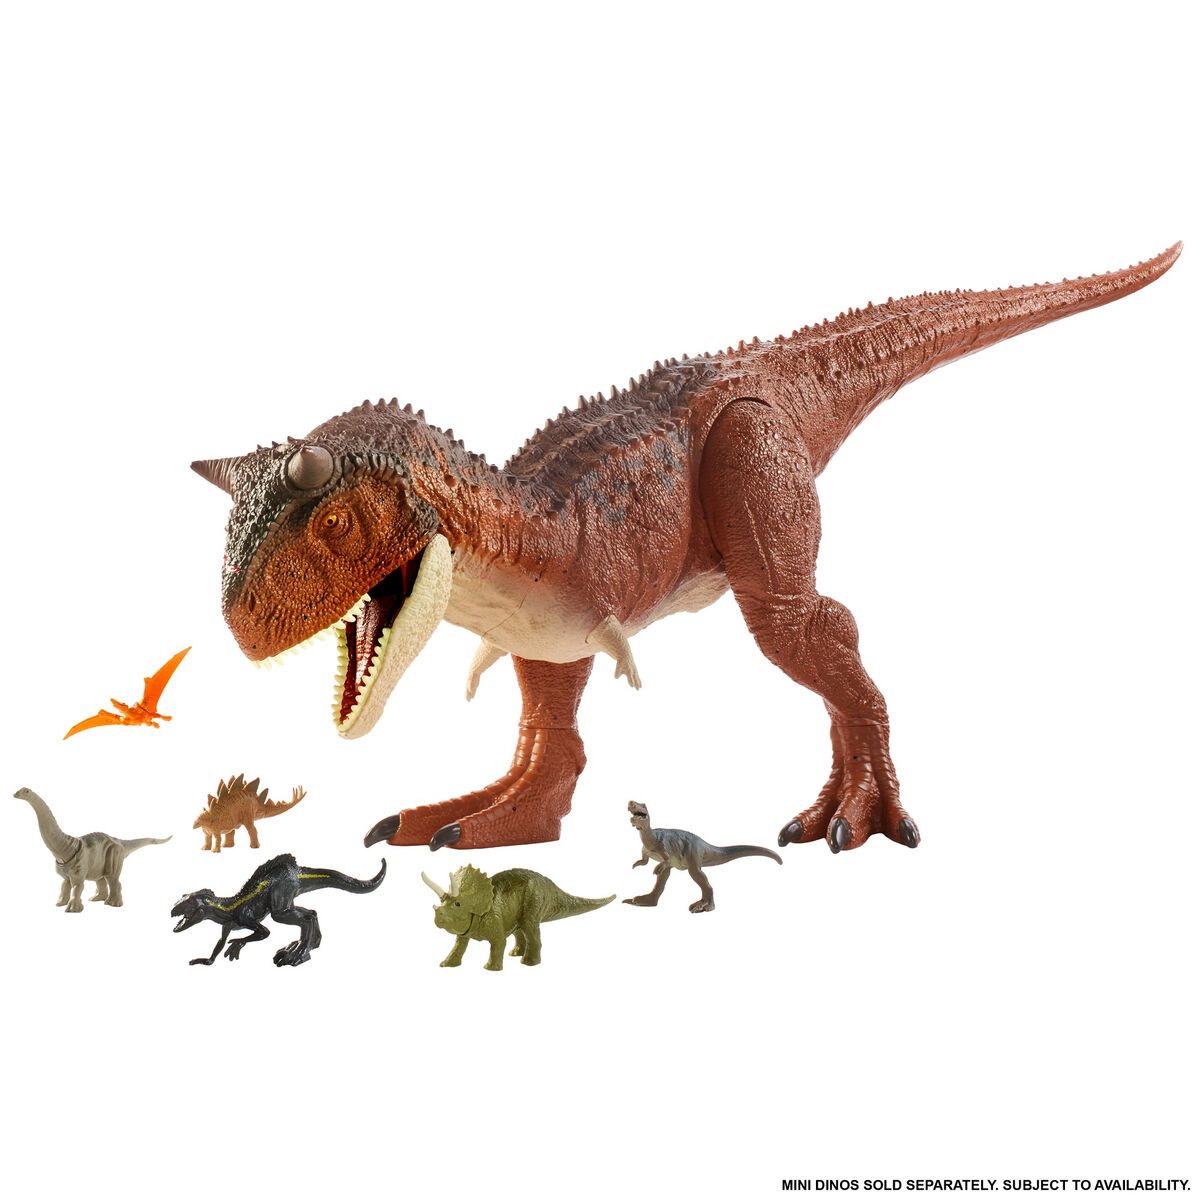 Dinosaur Mattel Jurassic World - Carnotaurus Toro Super Colossal 90 cm